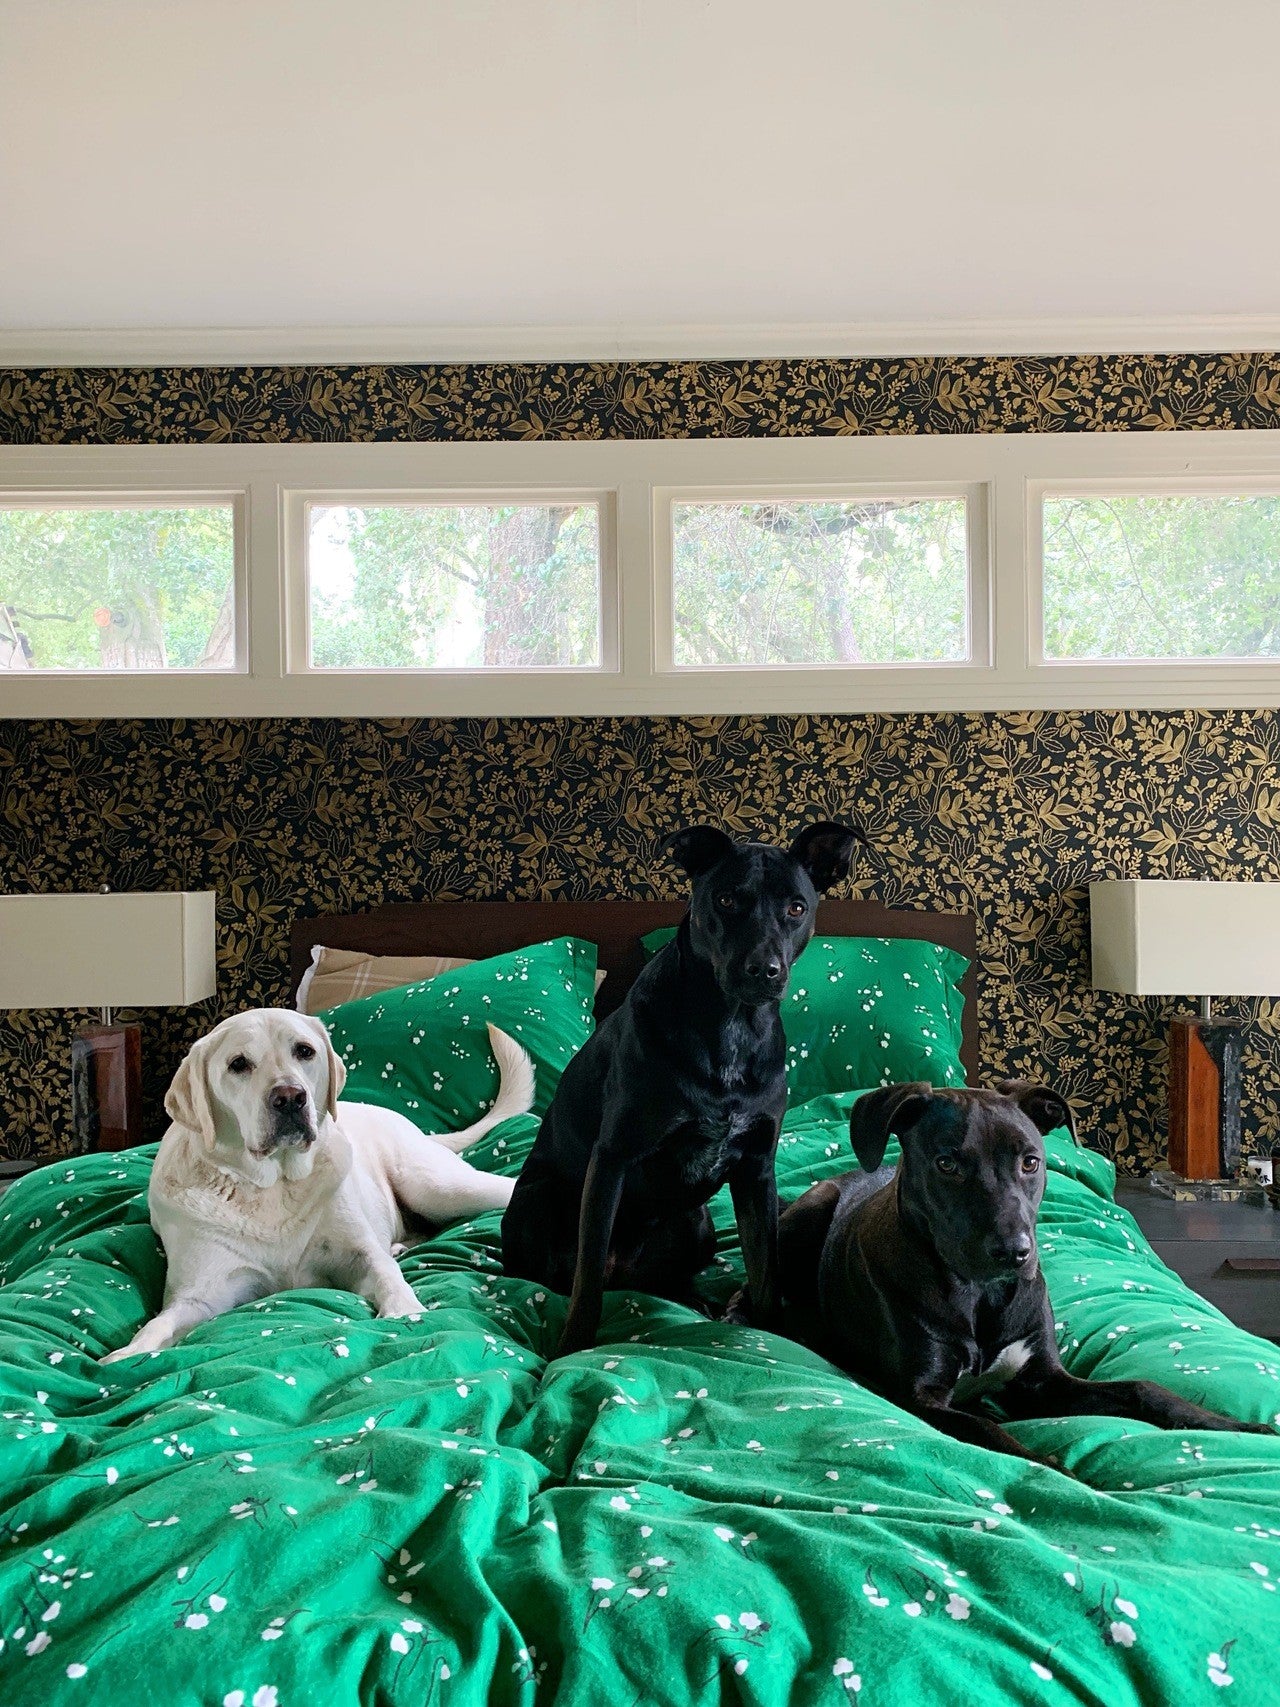 Take Your Dog to Work Day | Wildflower Emerald bedding | Charlotte Janvier | Hygge & West